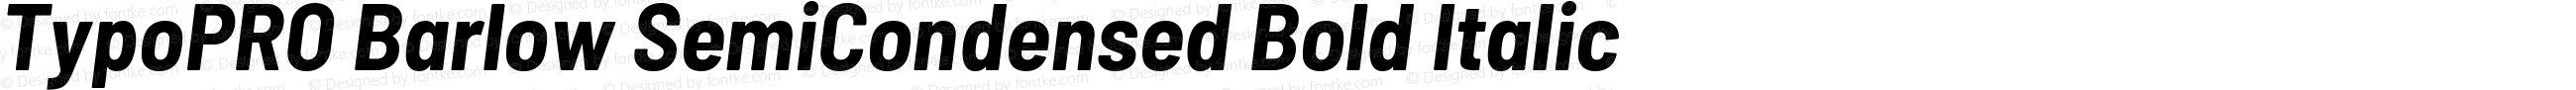 TypoPRO Barlow Semi Condensed Bold Italic